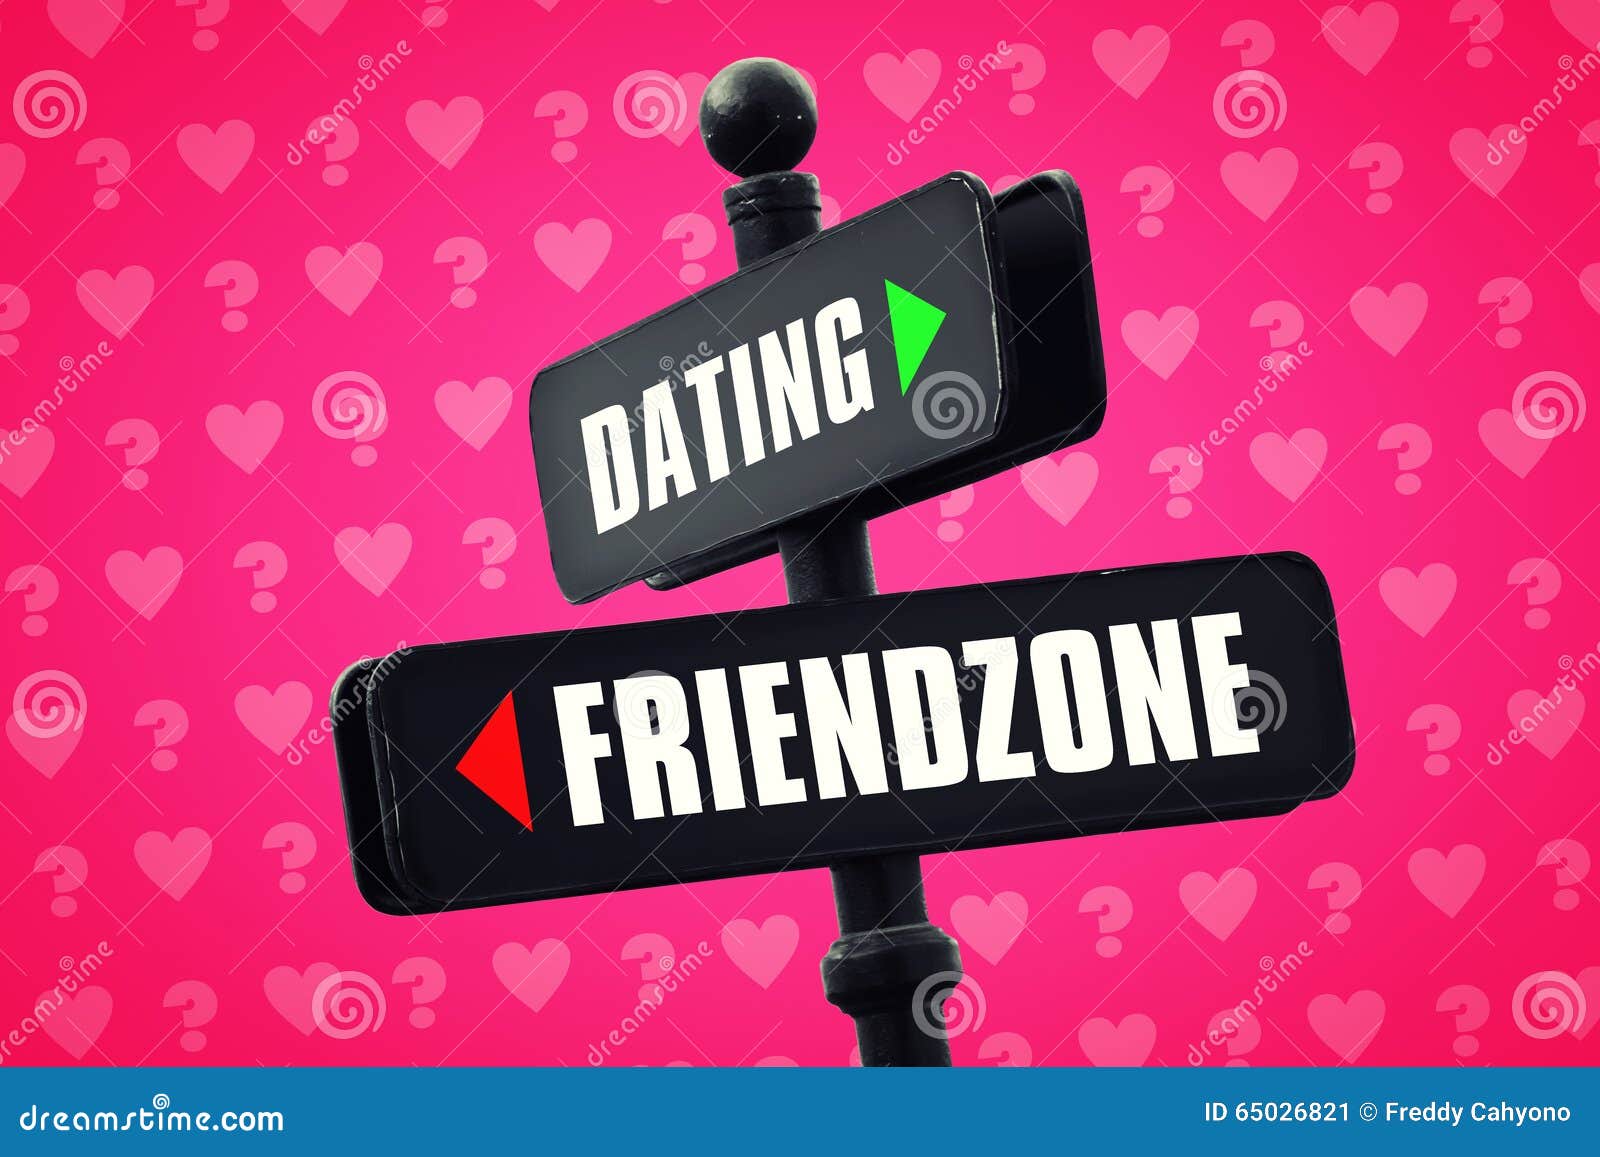 Login -0 friend dating zone dating Find local